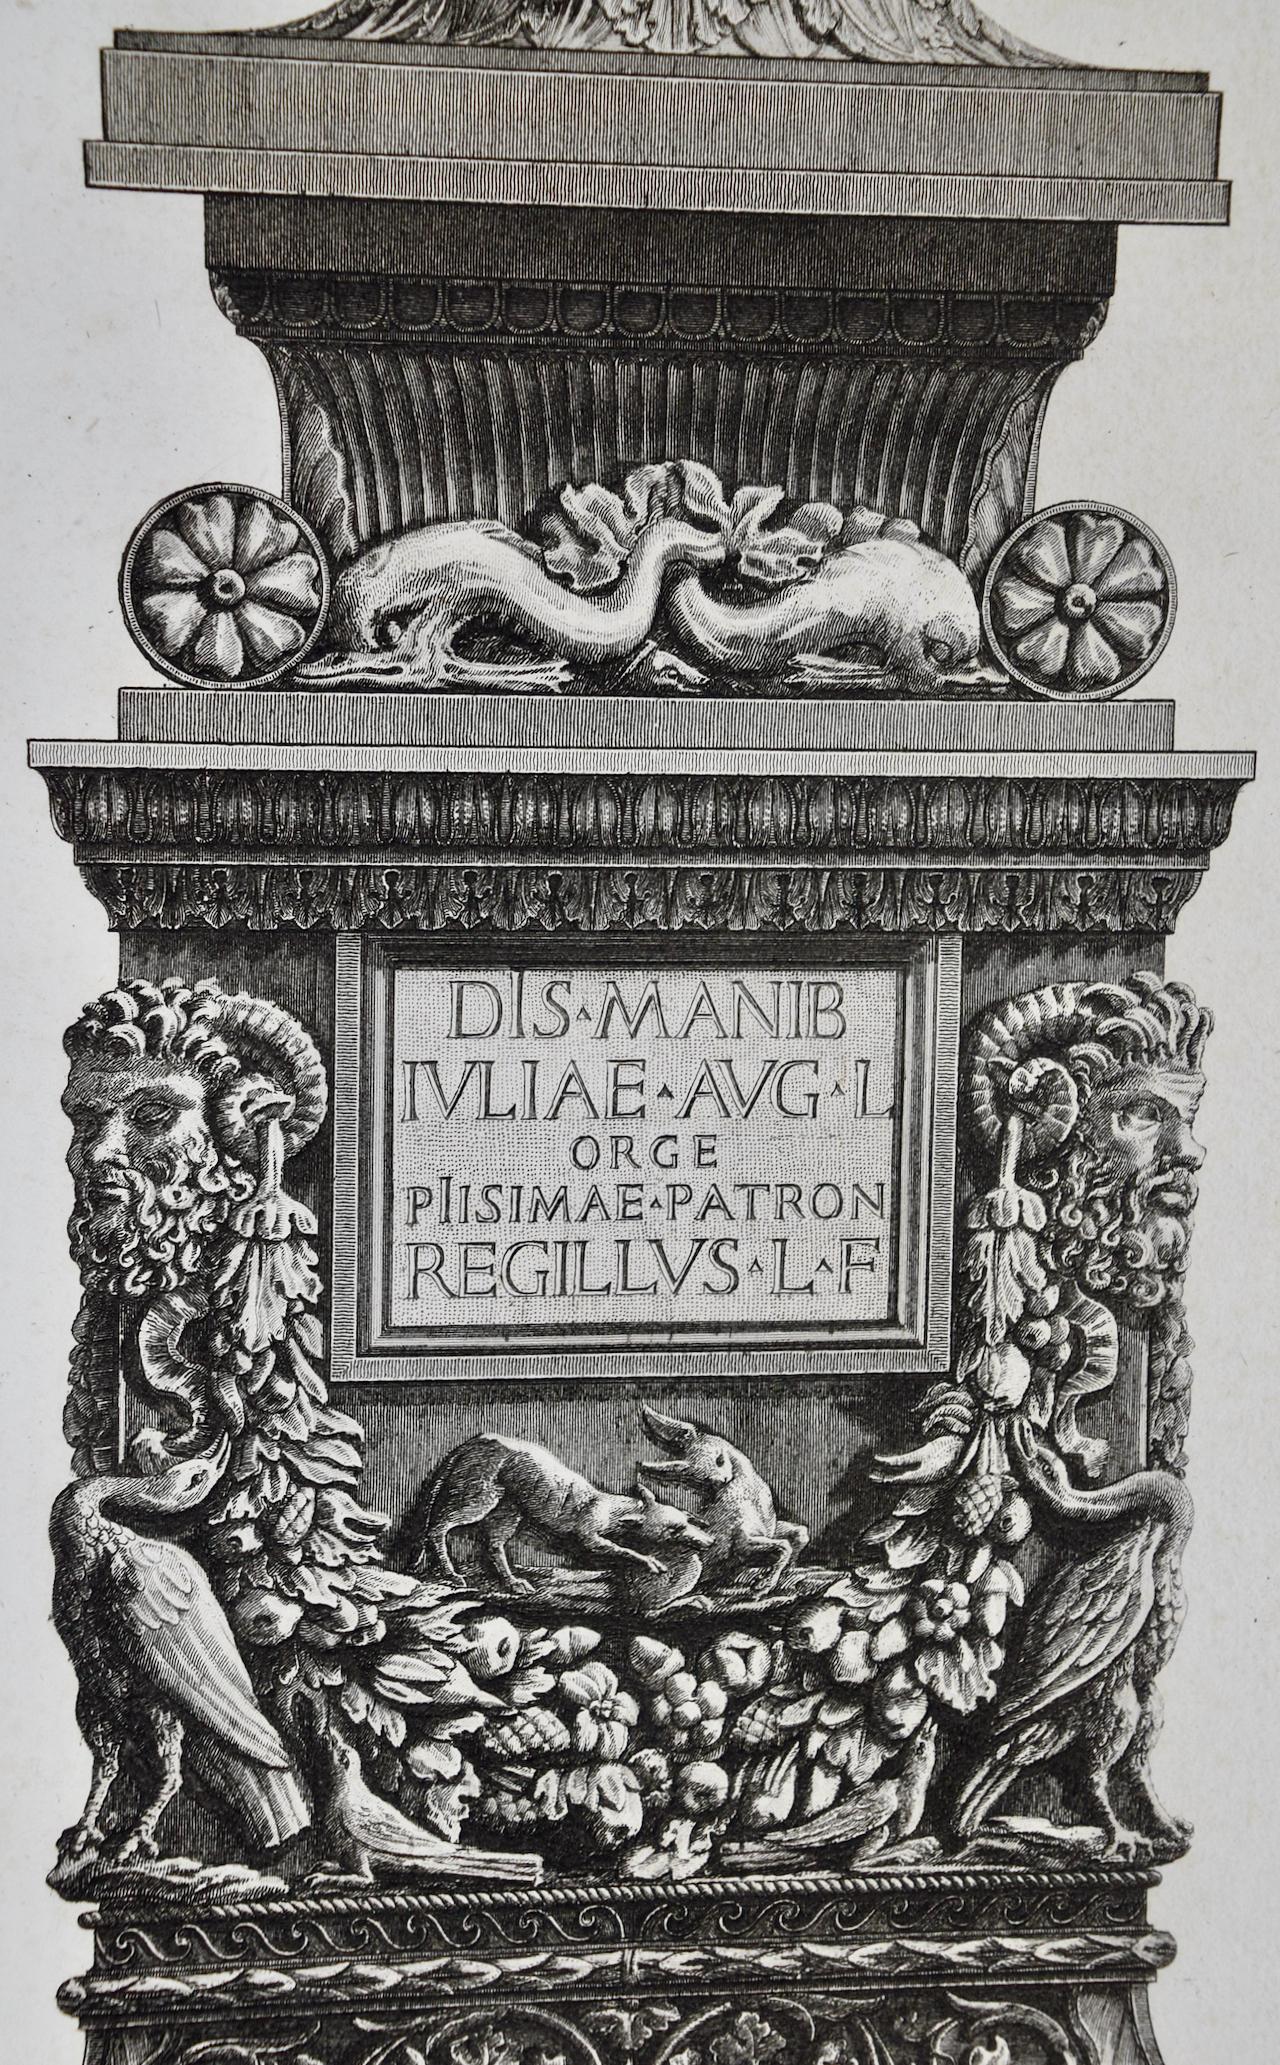 Ancient Roman Medici Marble Vase: An 18th Century Etching by Piranesi - Old Masters Print by Giovanni Battista Piranesi